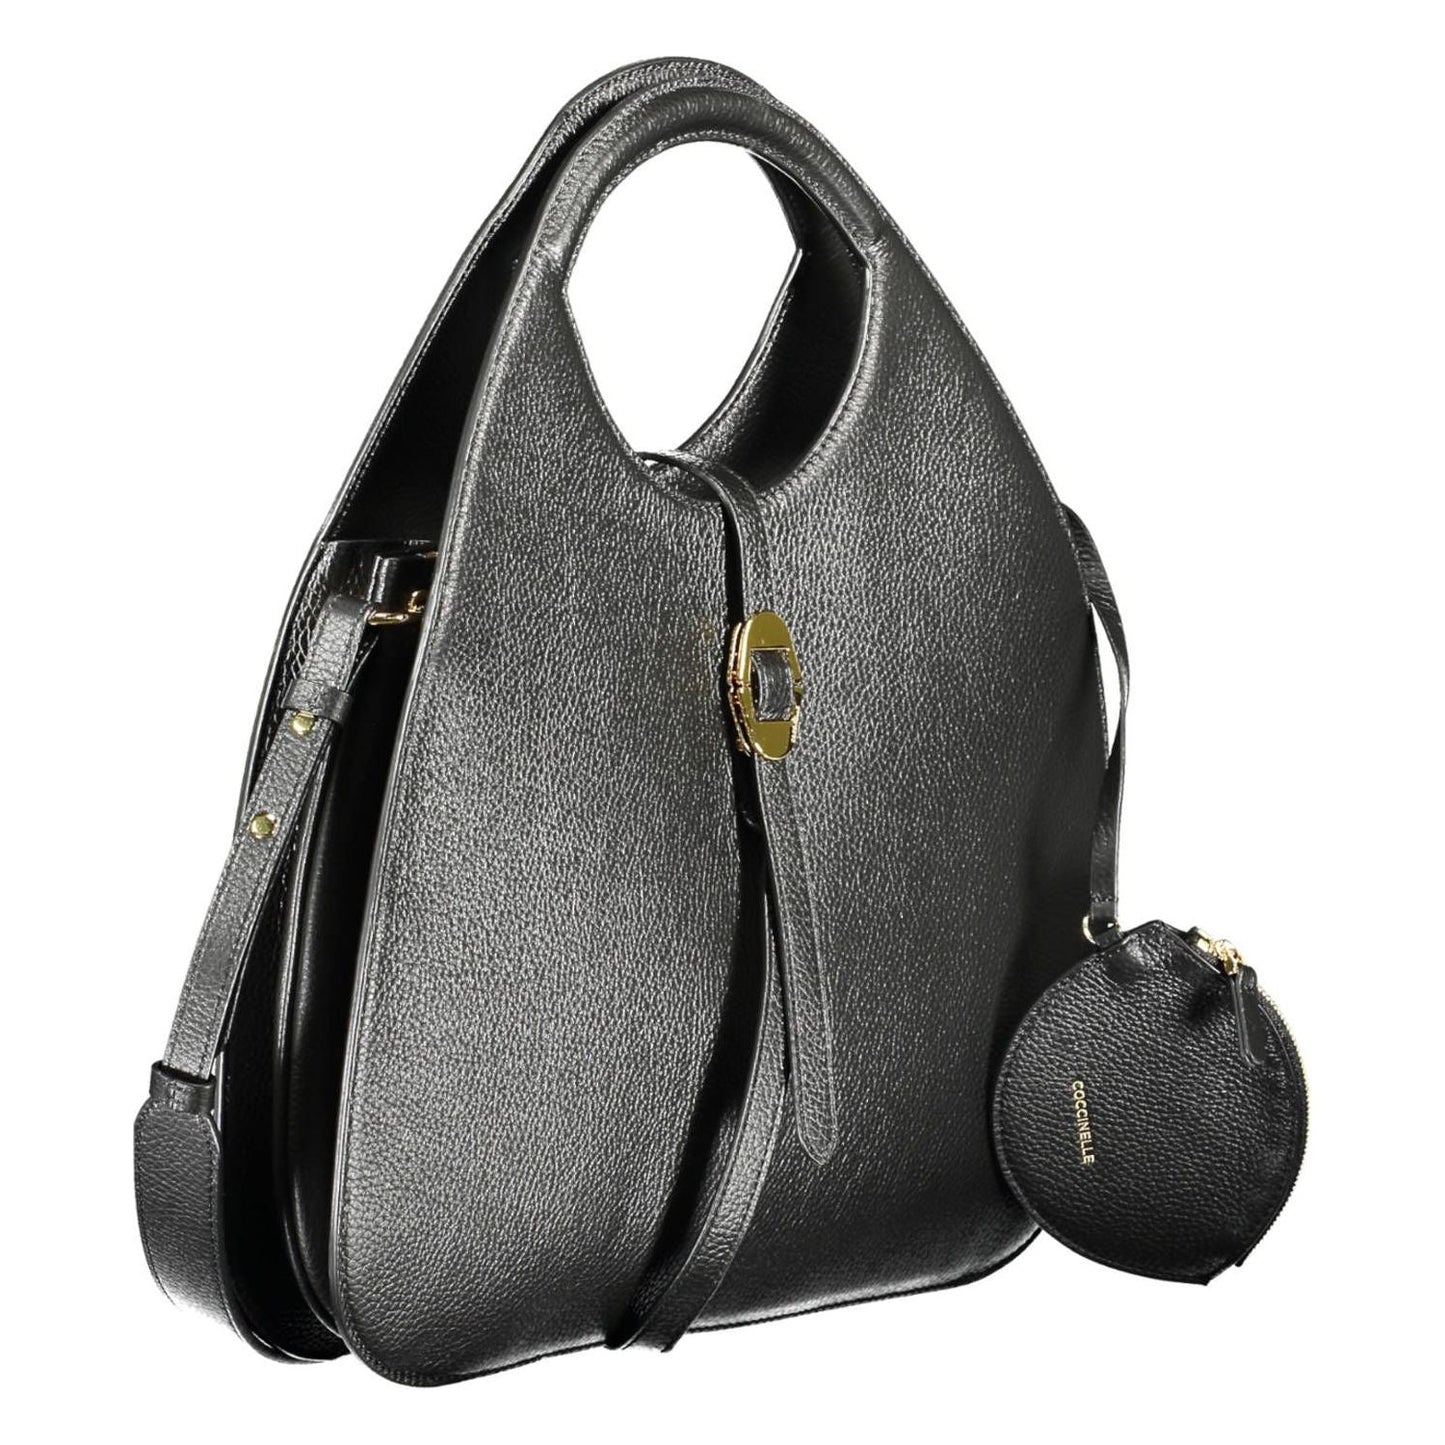 Coccinelle Elegant Black Leather Handbag with Removable Strap elegant-black-leather-handbag-with-removable-strap